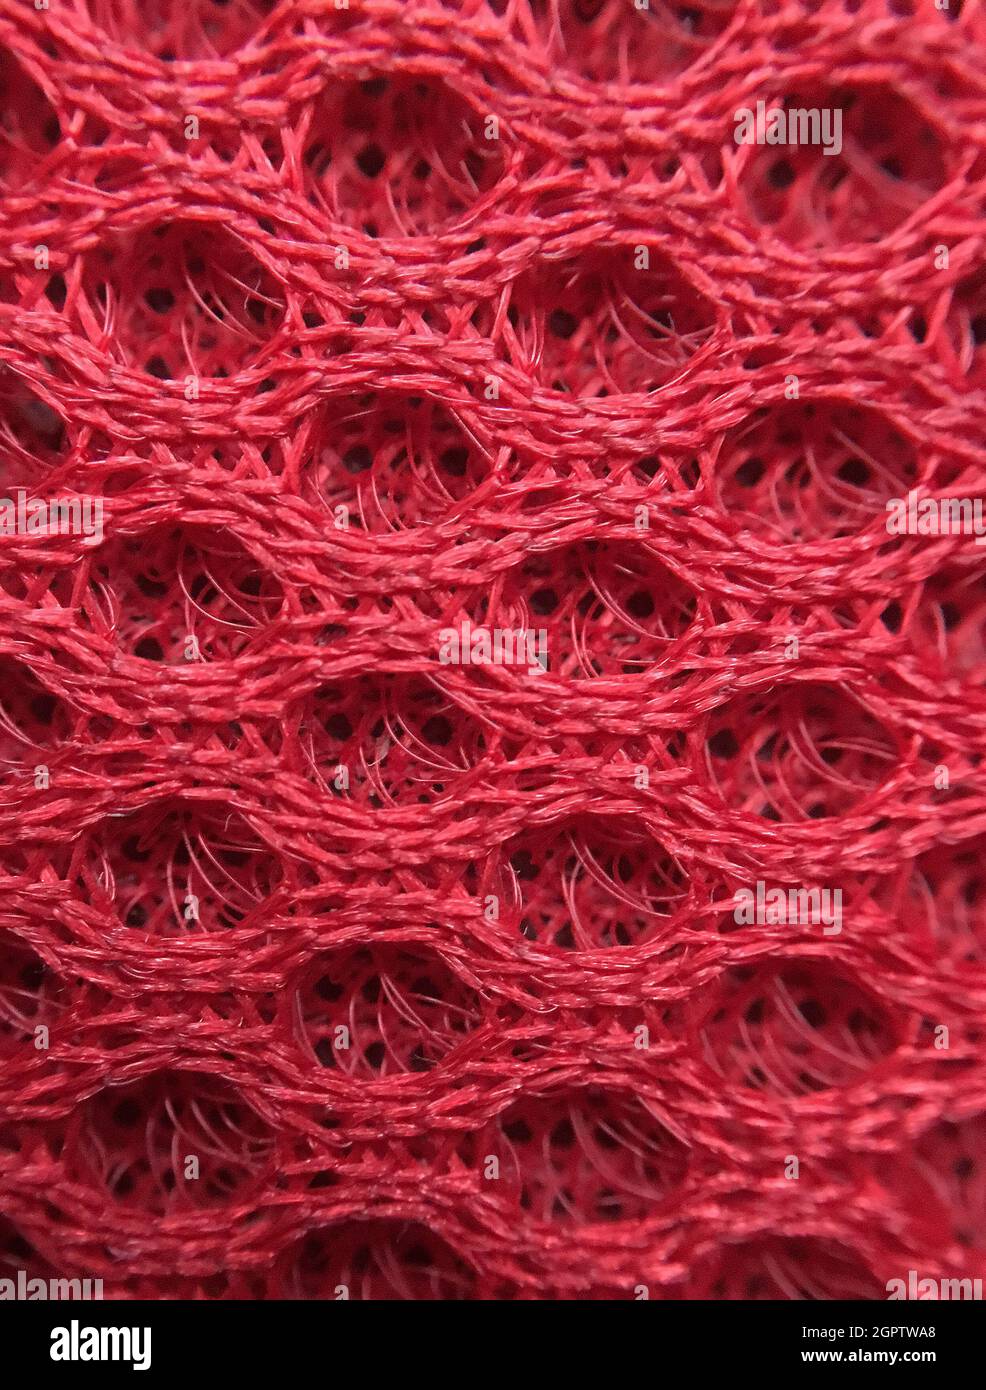 Textur-Tapete von einem roten Stuhl - Nahaufnahme Stockfoto